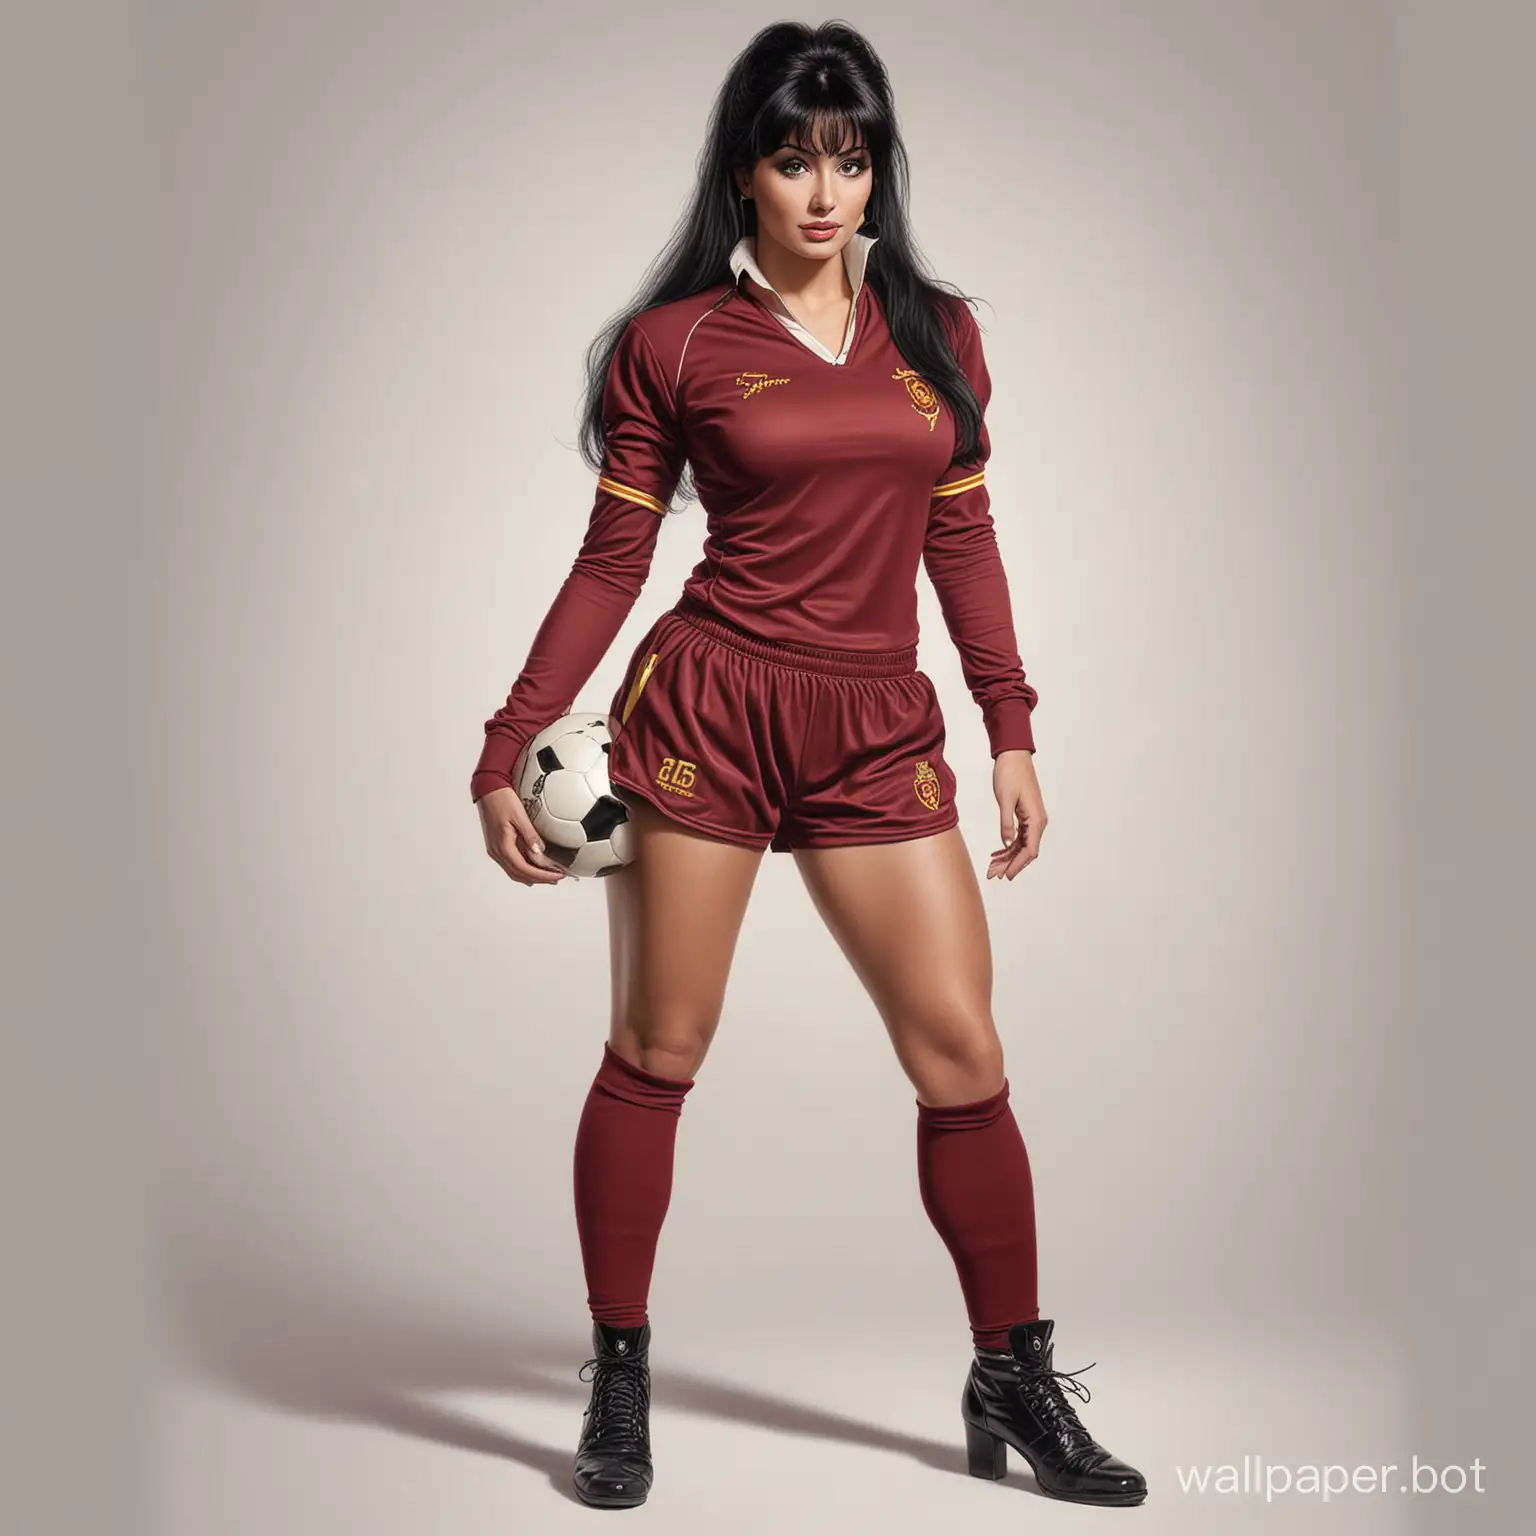 Realistic-Portrait-of-Elvira-in-Burgundy-Soccer-Uniform